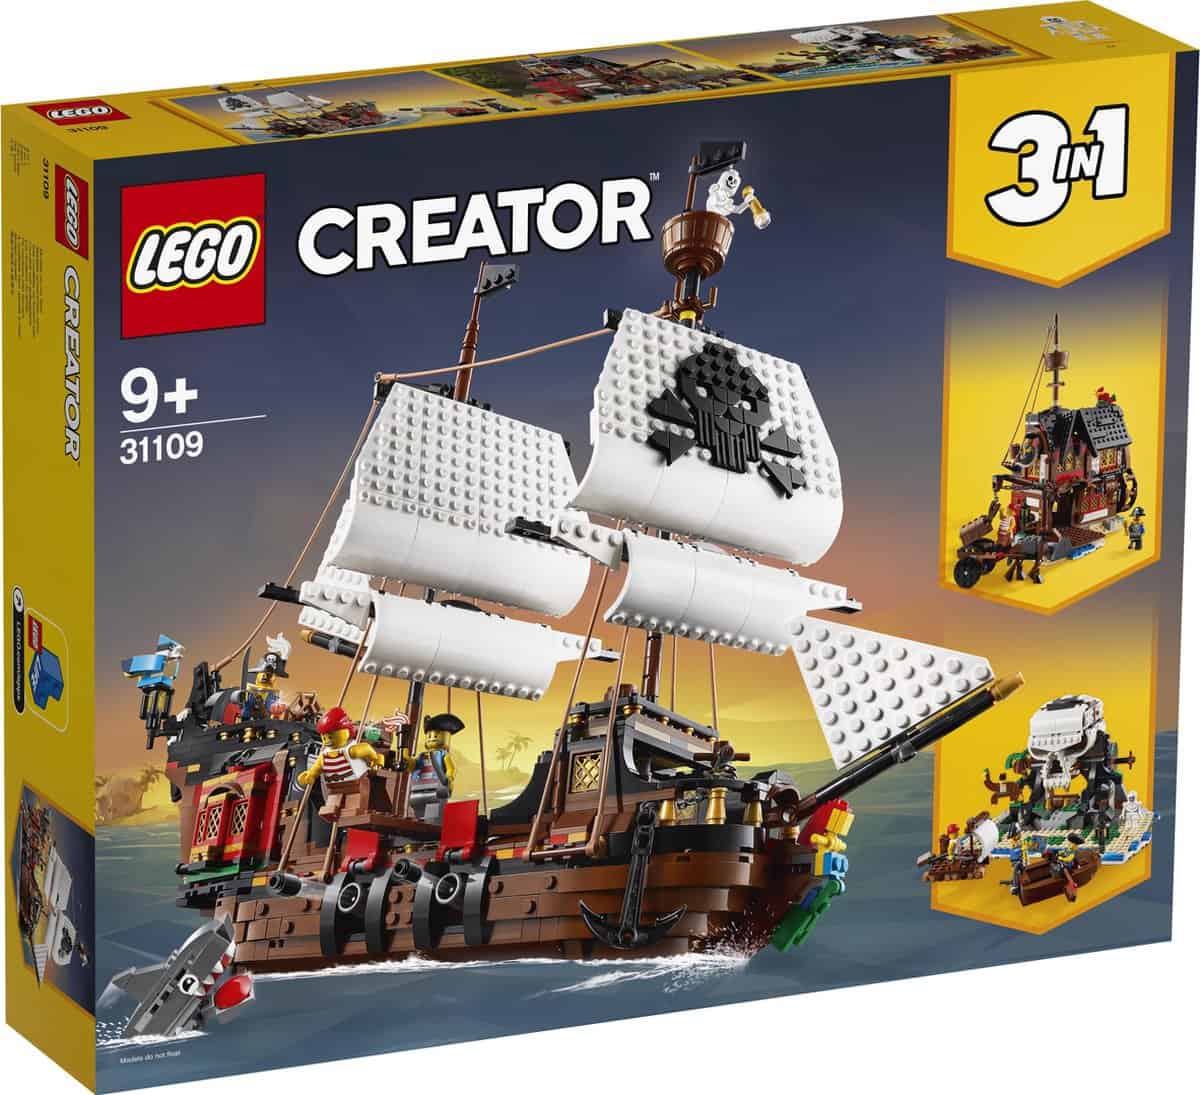 Build- LEGO Creator Pirate Ship - 31109